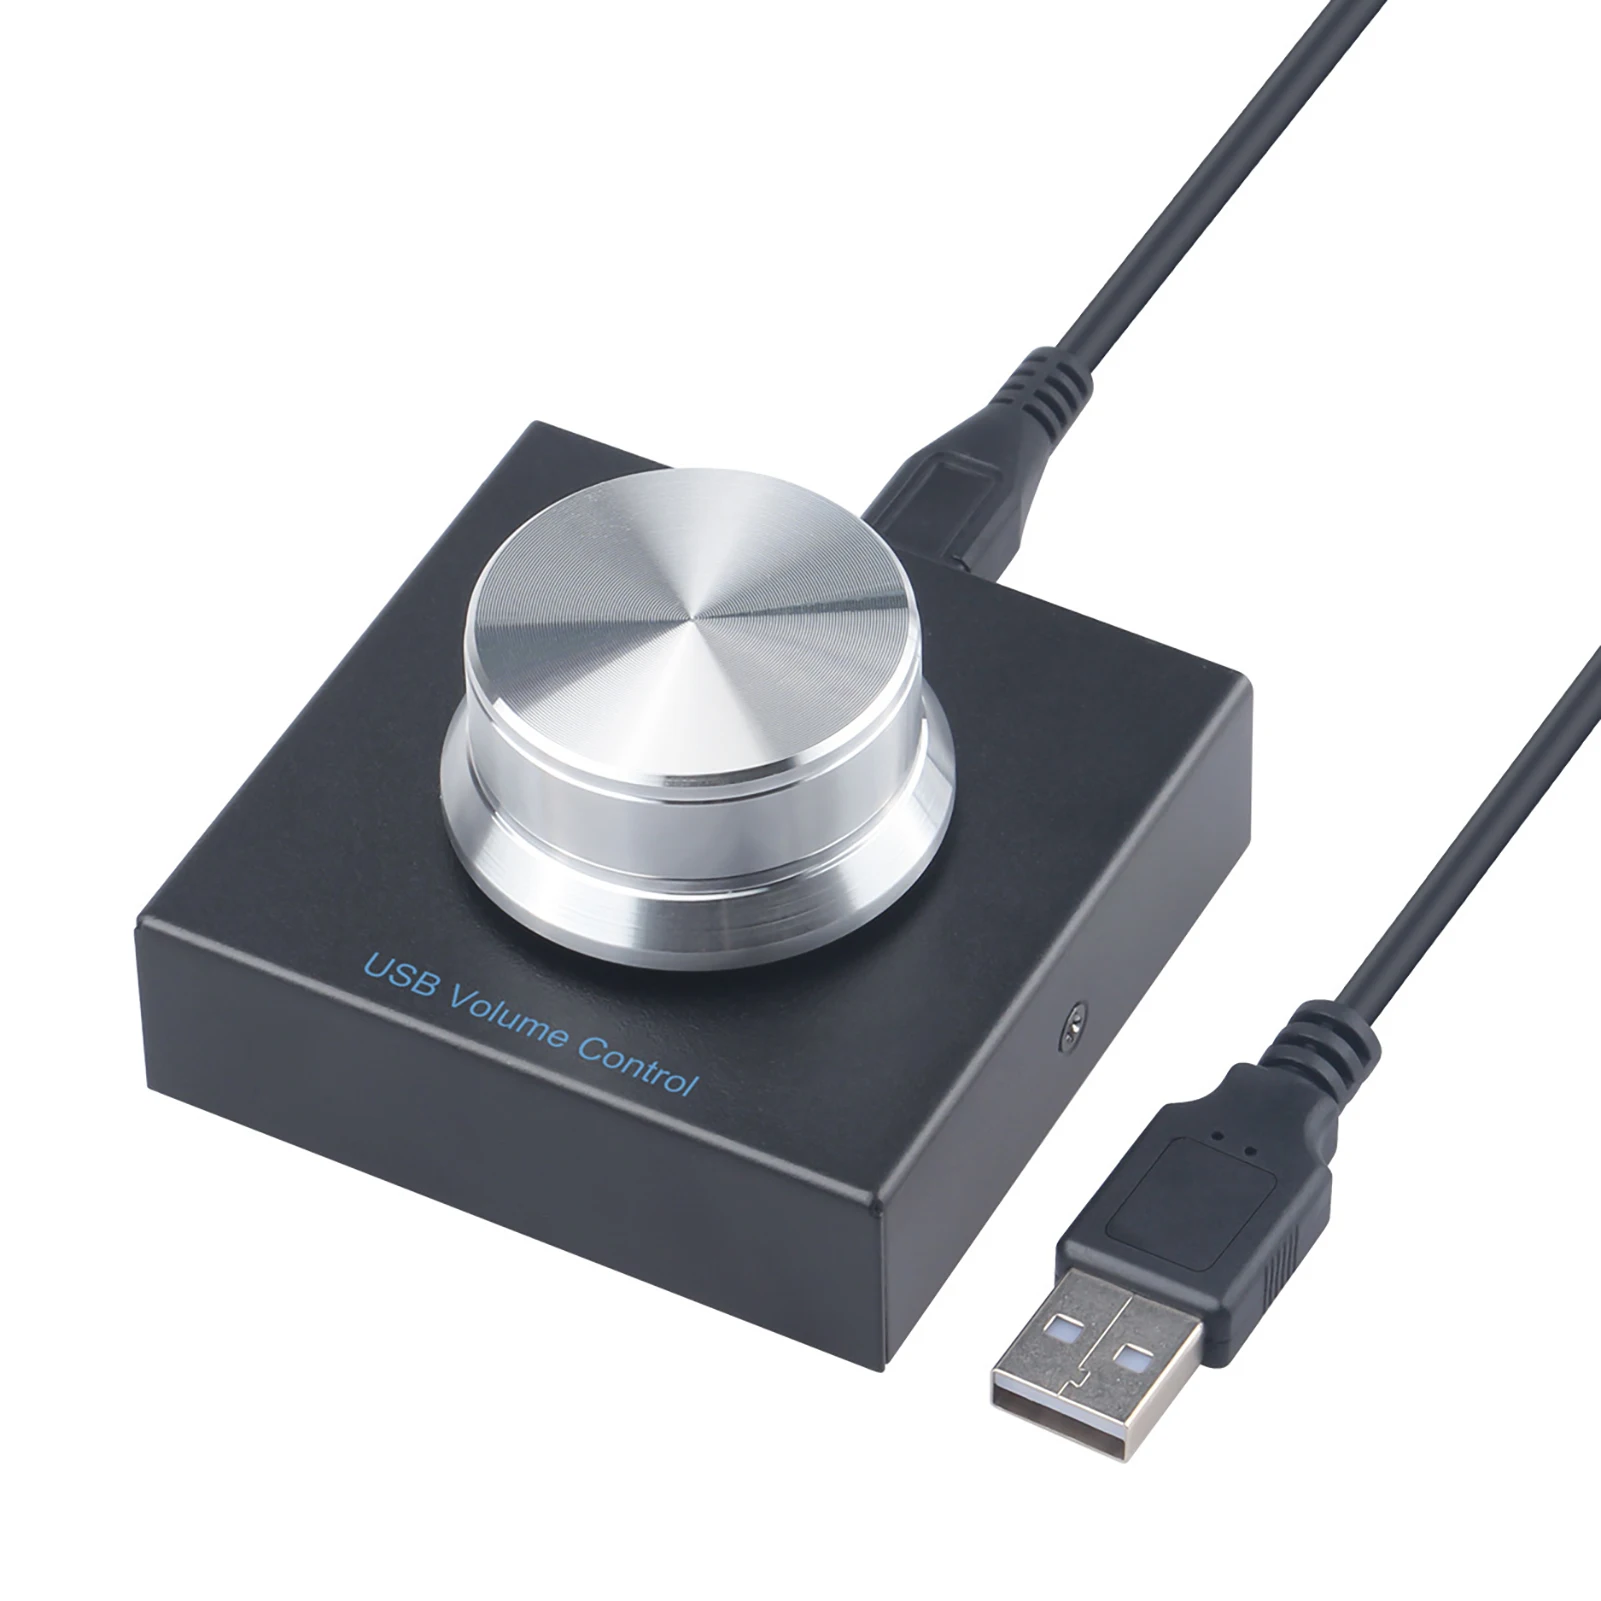 

USB-регулятор громкости Muslady для ПК, компьютерная колонка, ручка регулировки громкости звука, одна кнопка отключения звука, Plug and Play